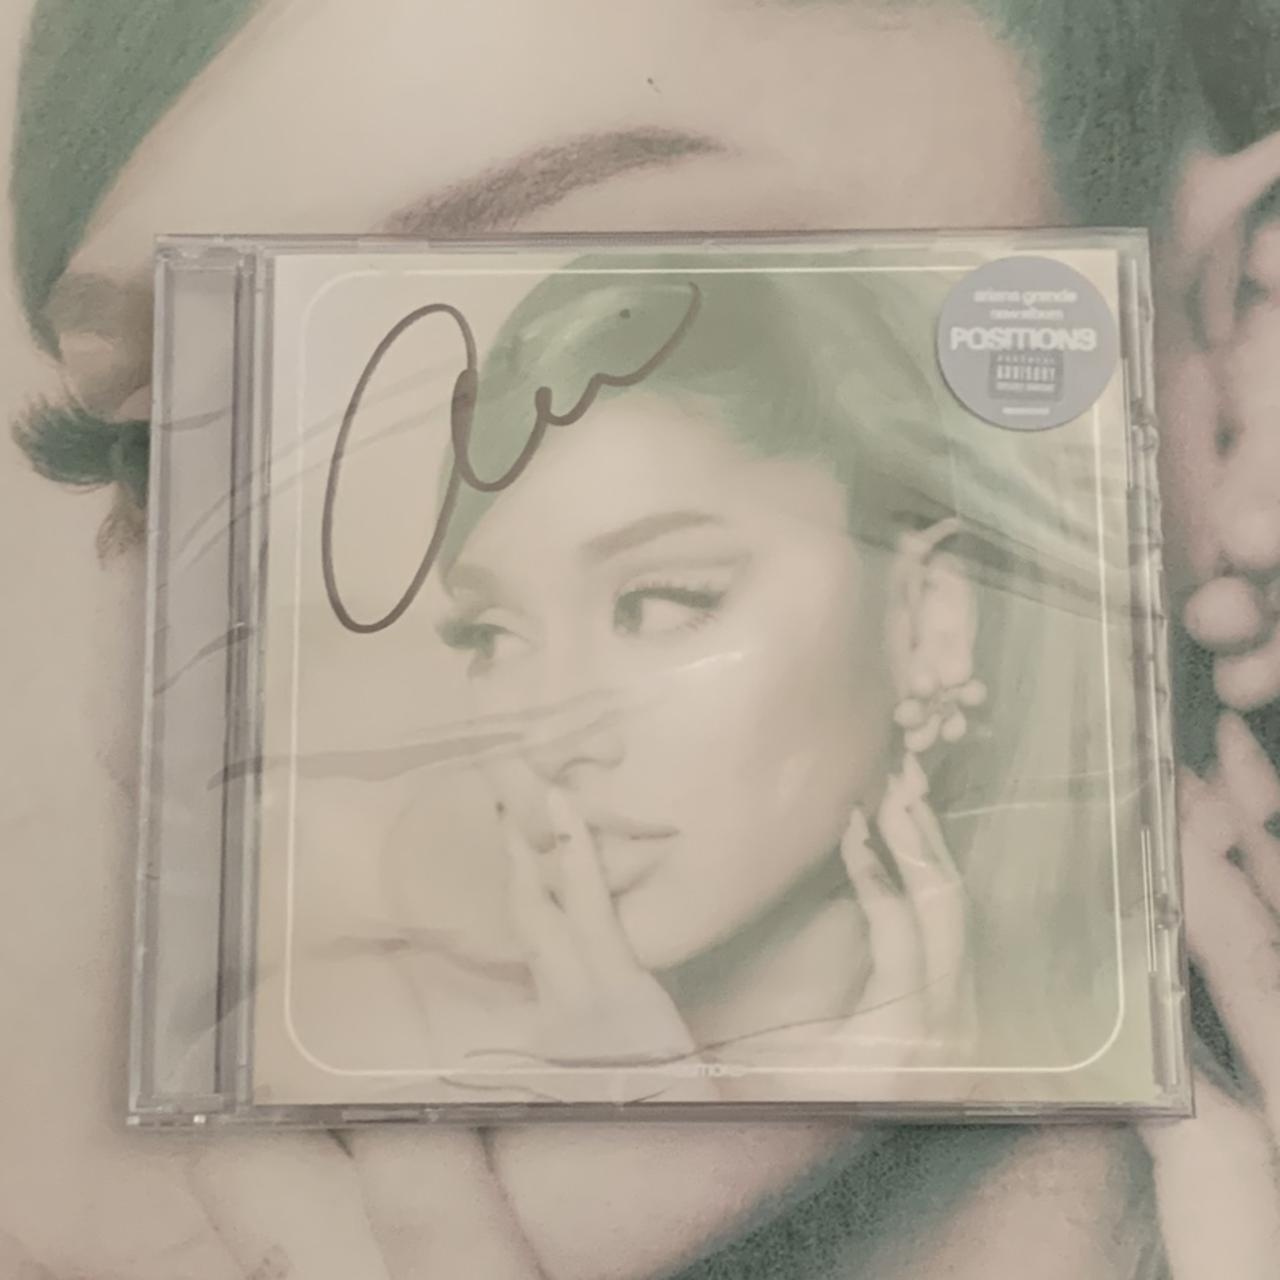 Ariana Grande Positions Vinyl! 🪐 - In great - Depop